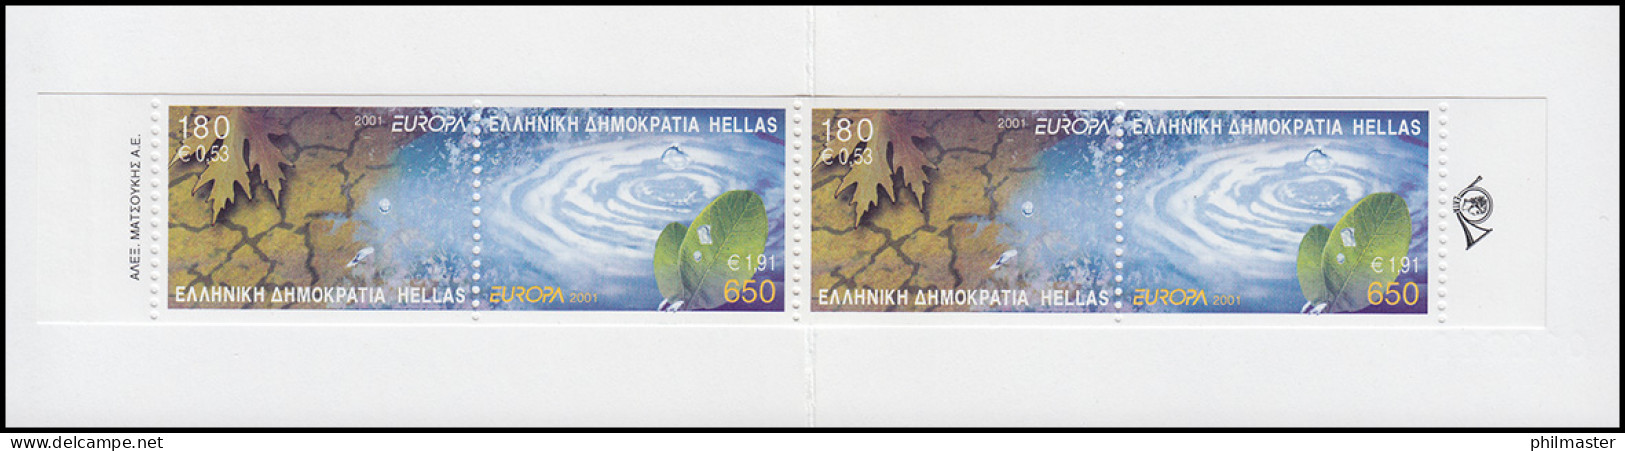 Griechenland Markenheftchen 23 Europa 2001, ** Postfrisch - Carnets